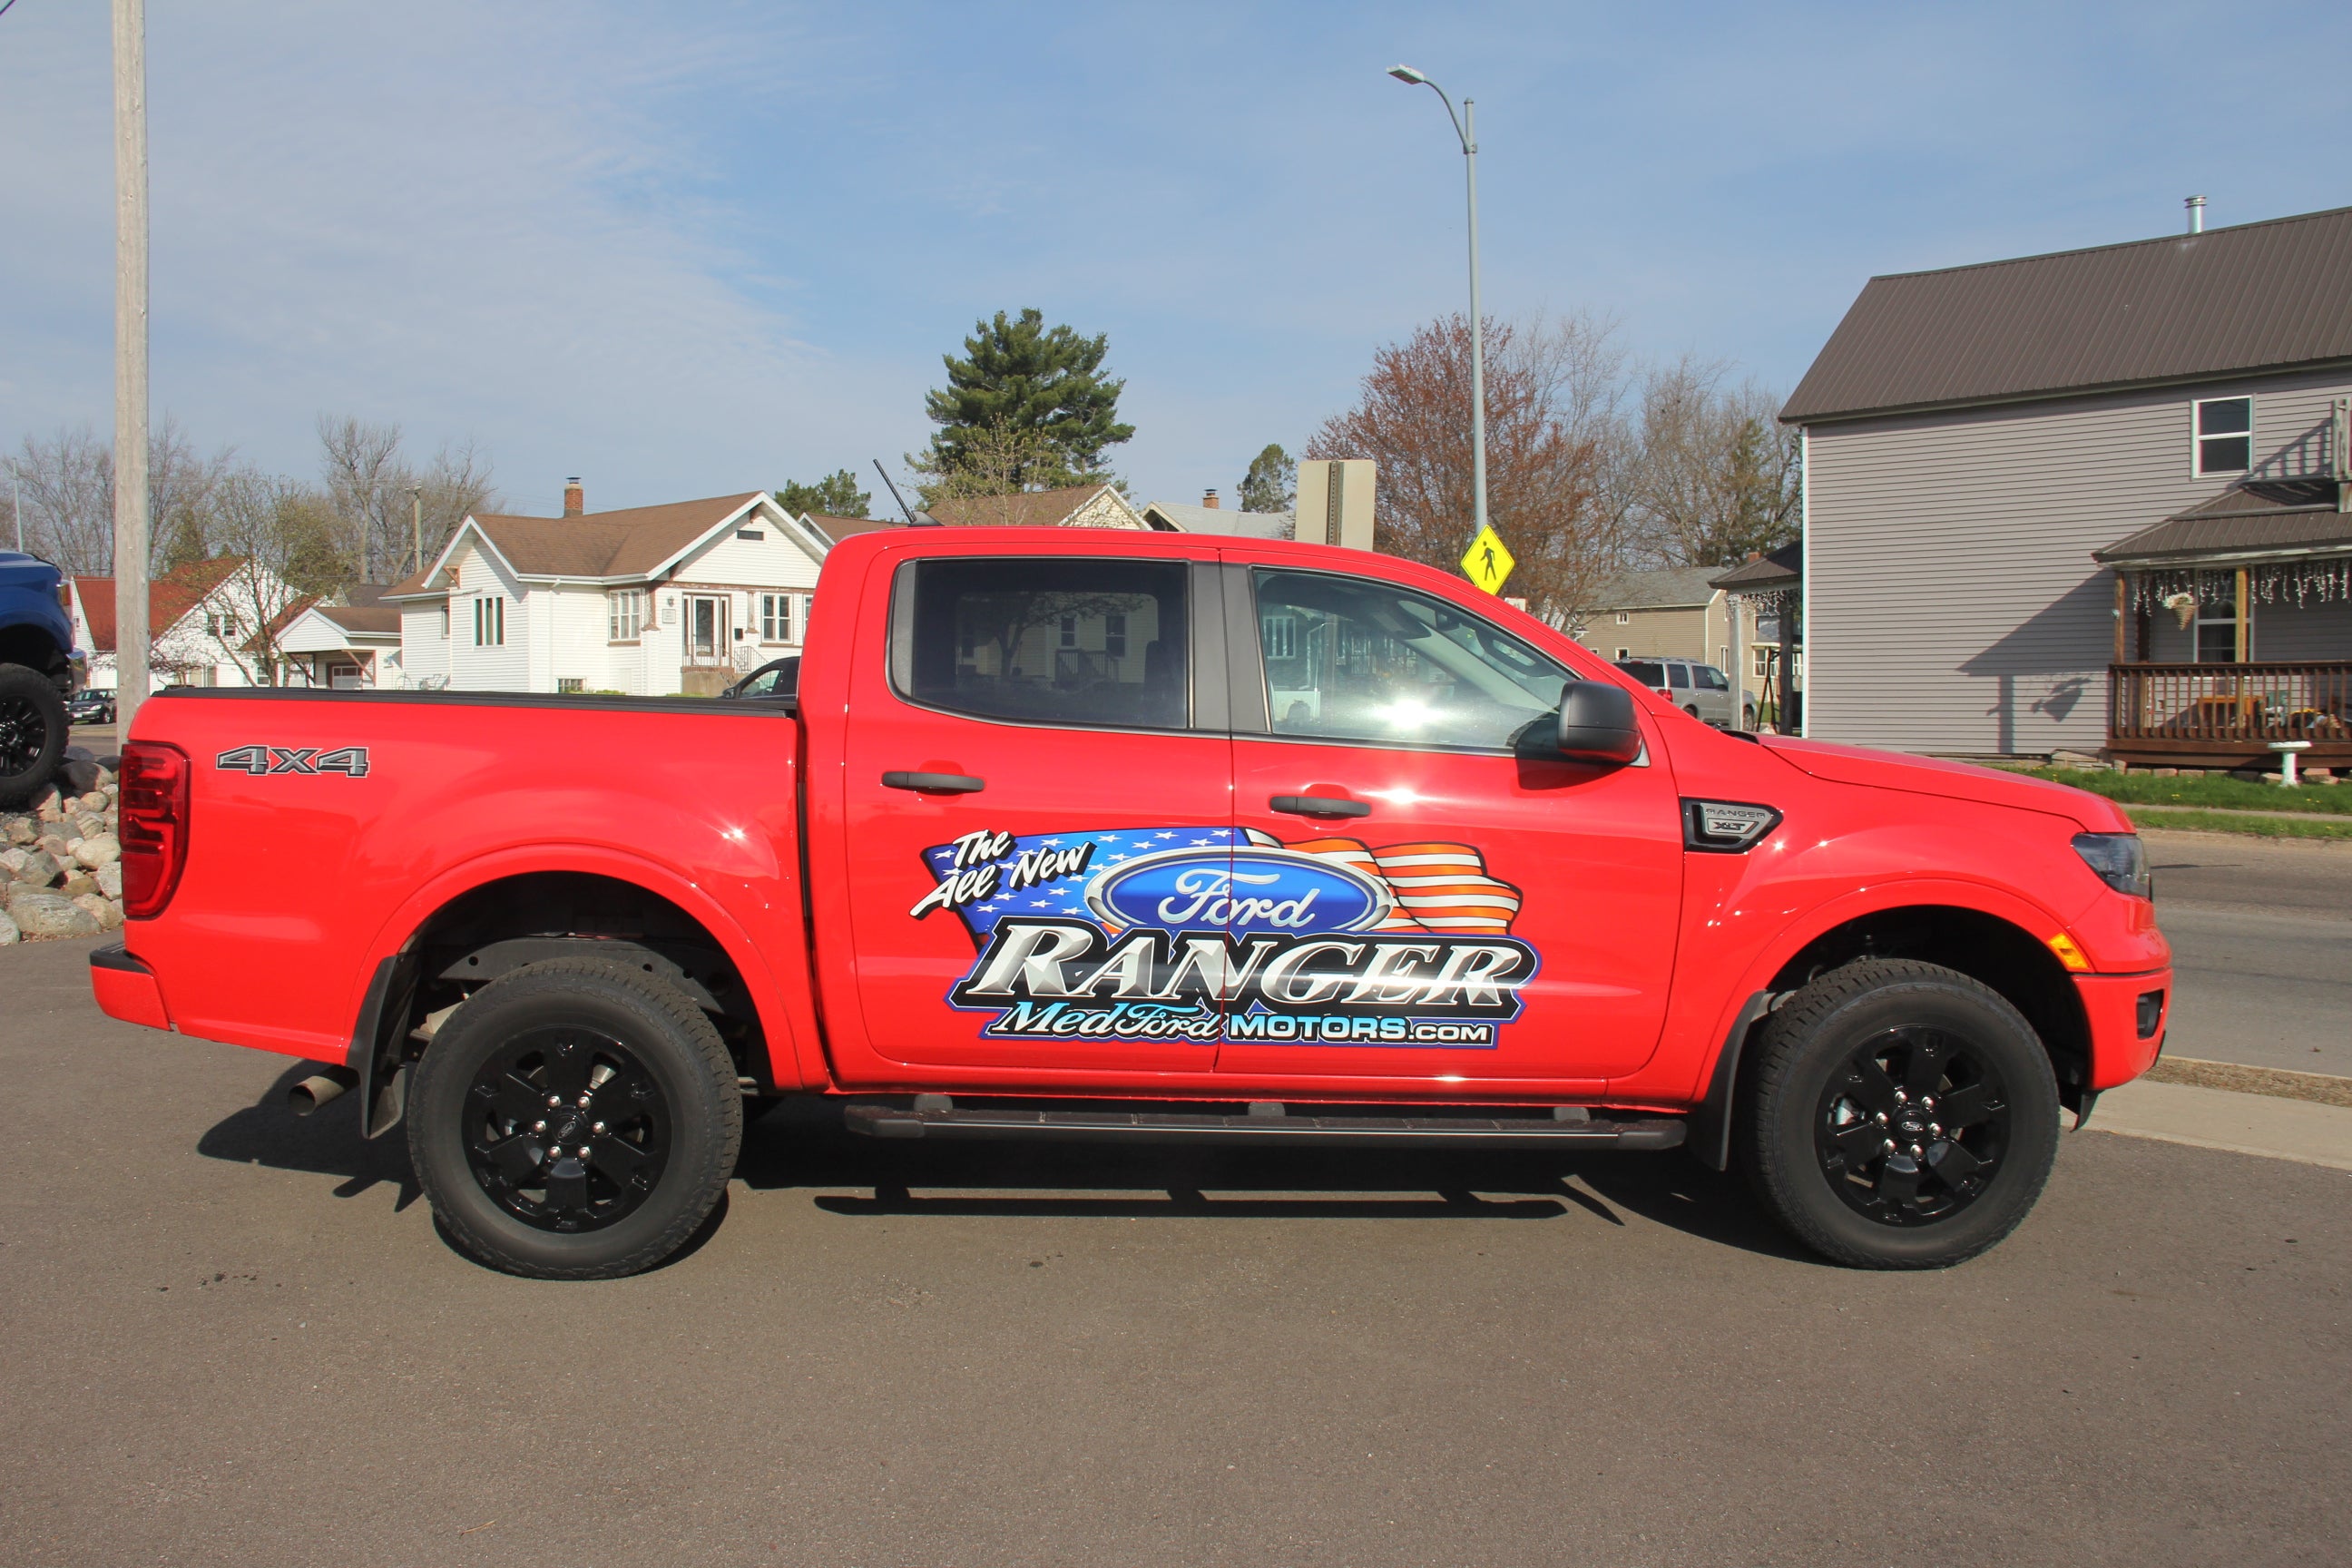 Ford Ranger | Medford Motors, Inc. in Medford WI